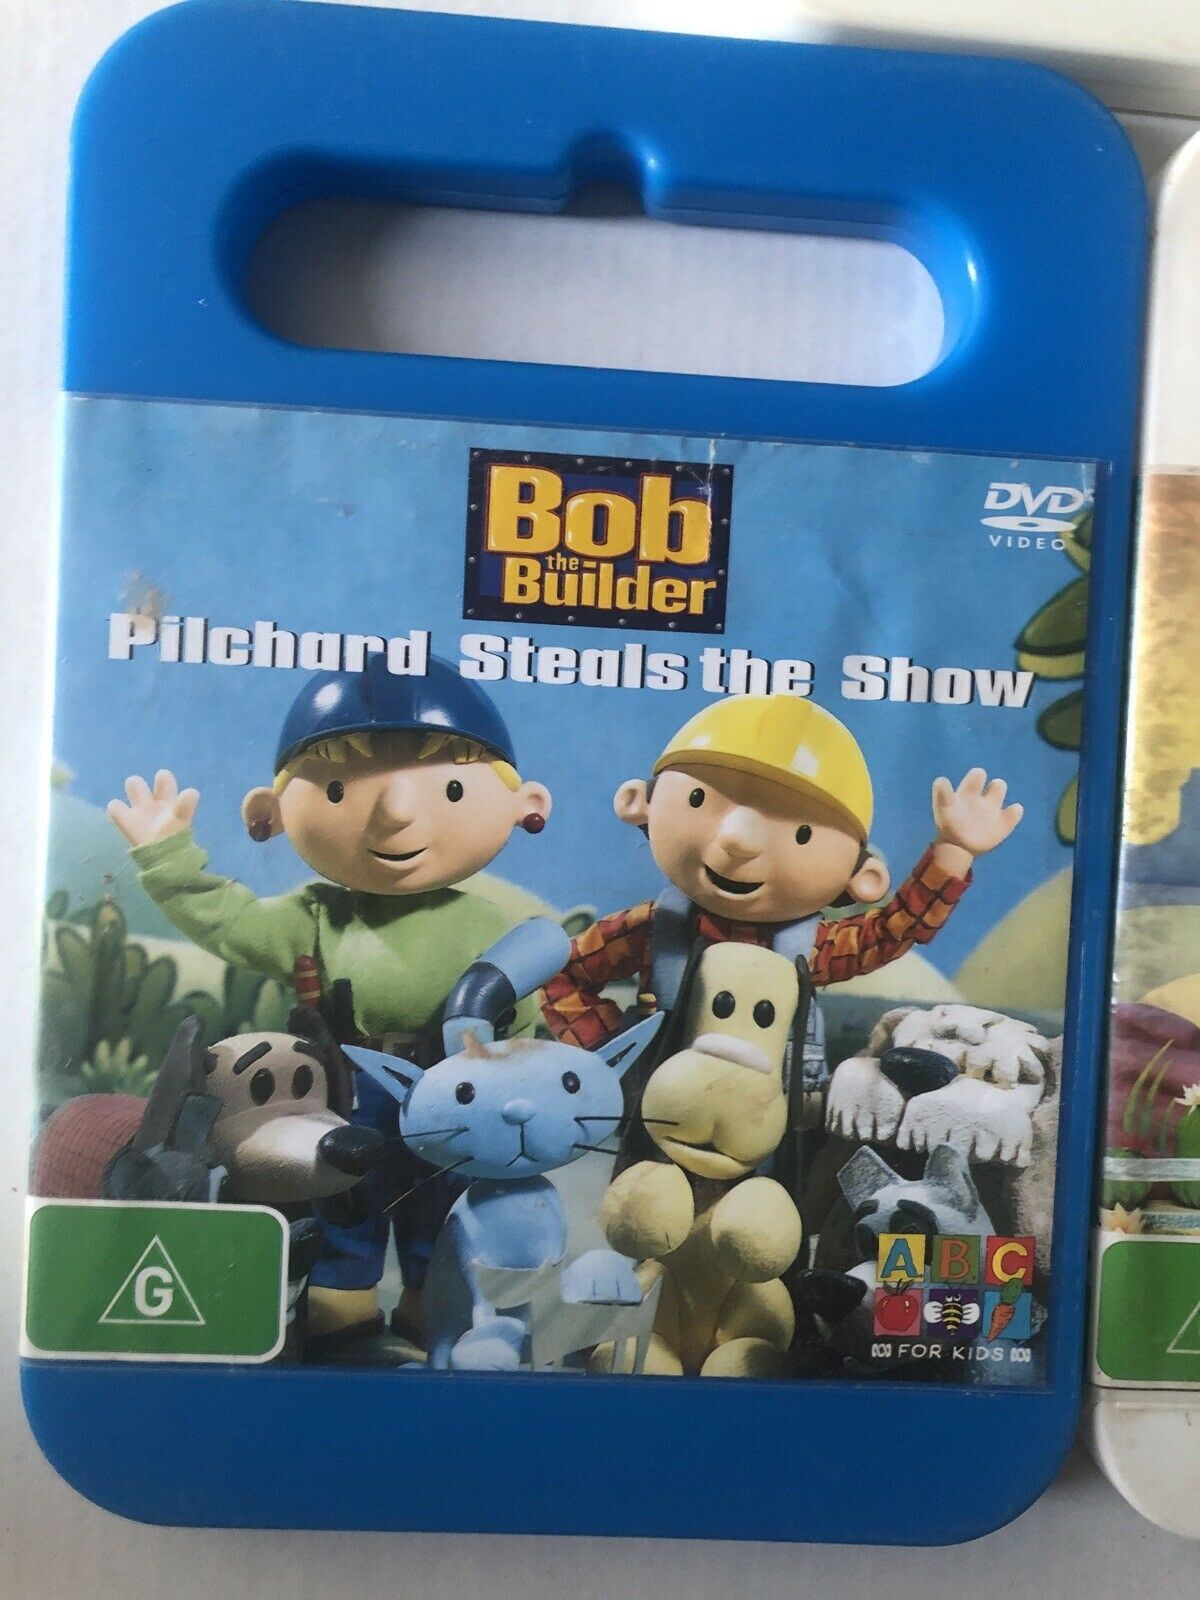 3x Bob The Builder DVD Collection - Snowed Under, Pilchard Steals Show, Built Wi